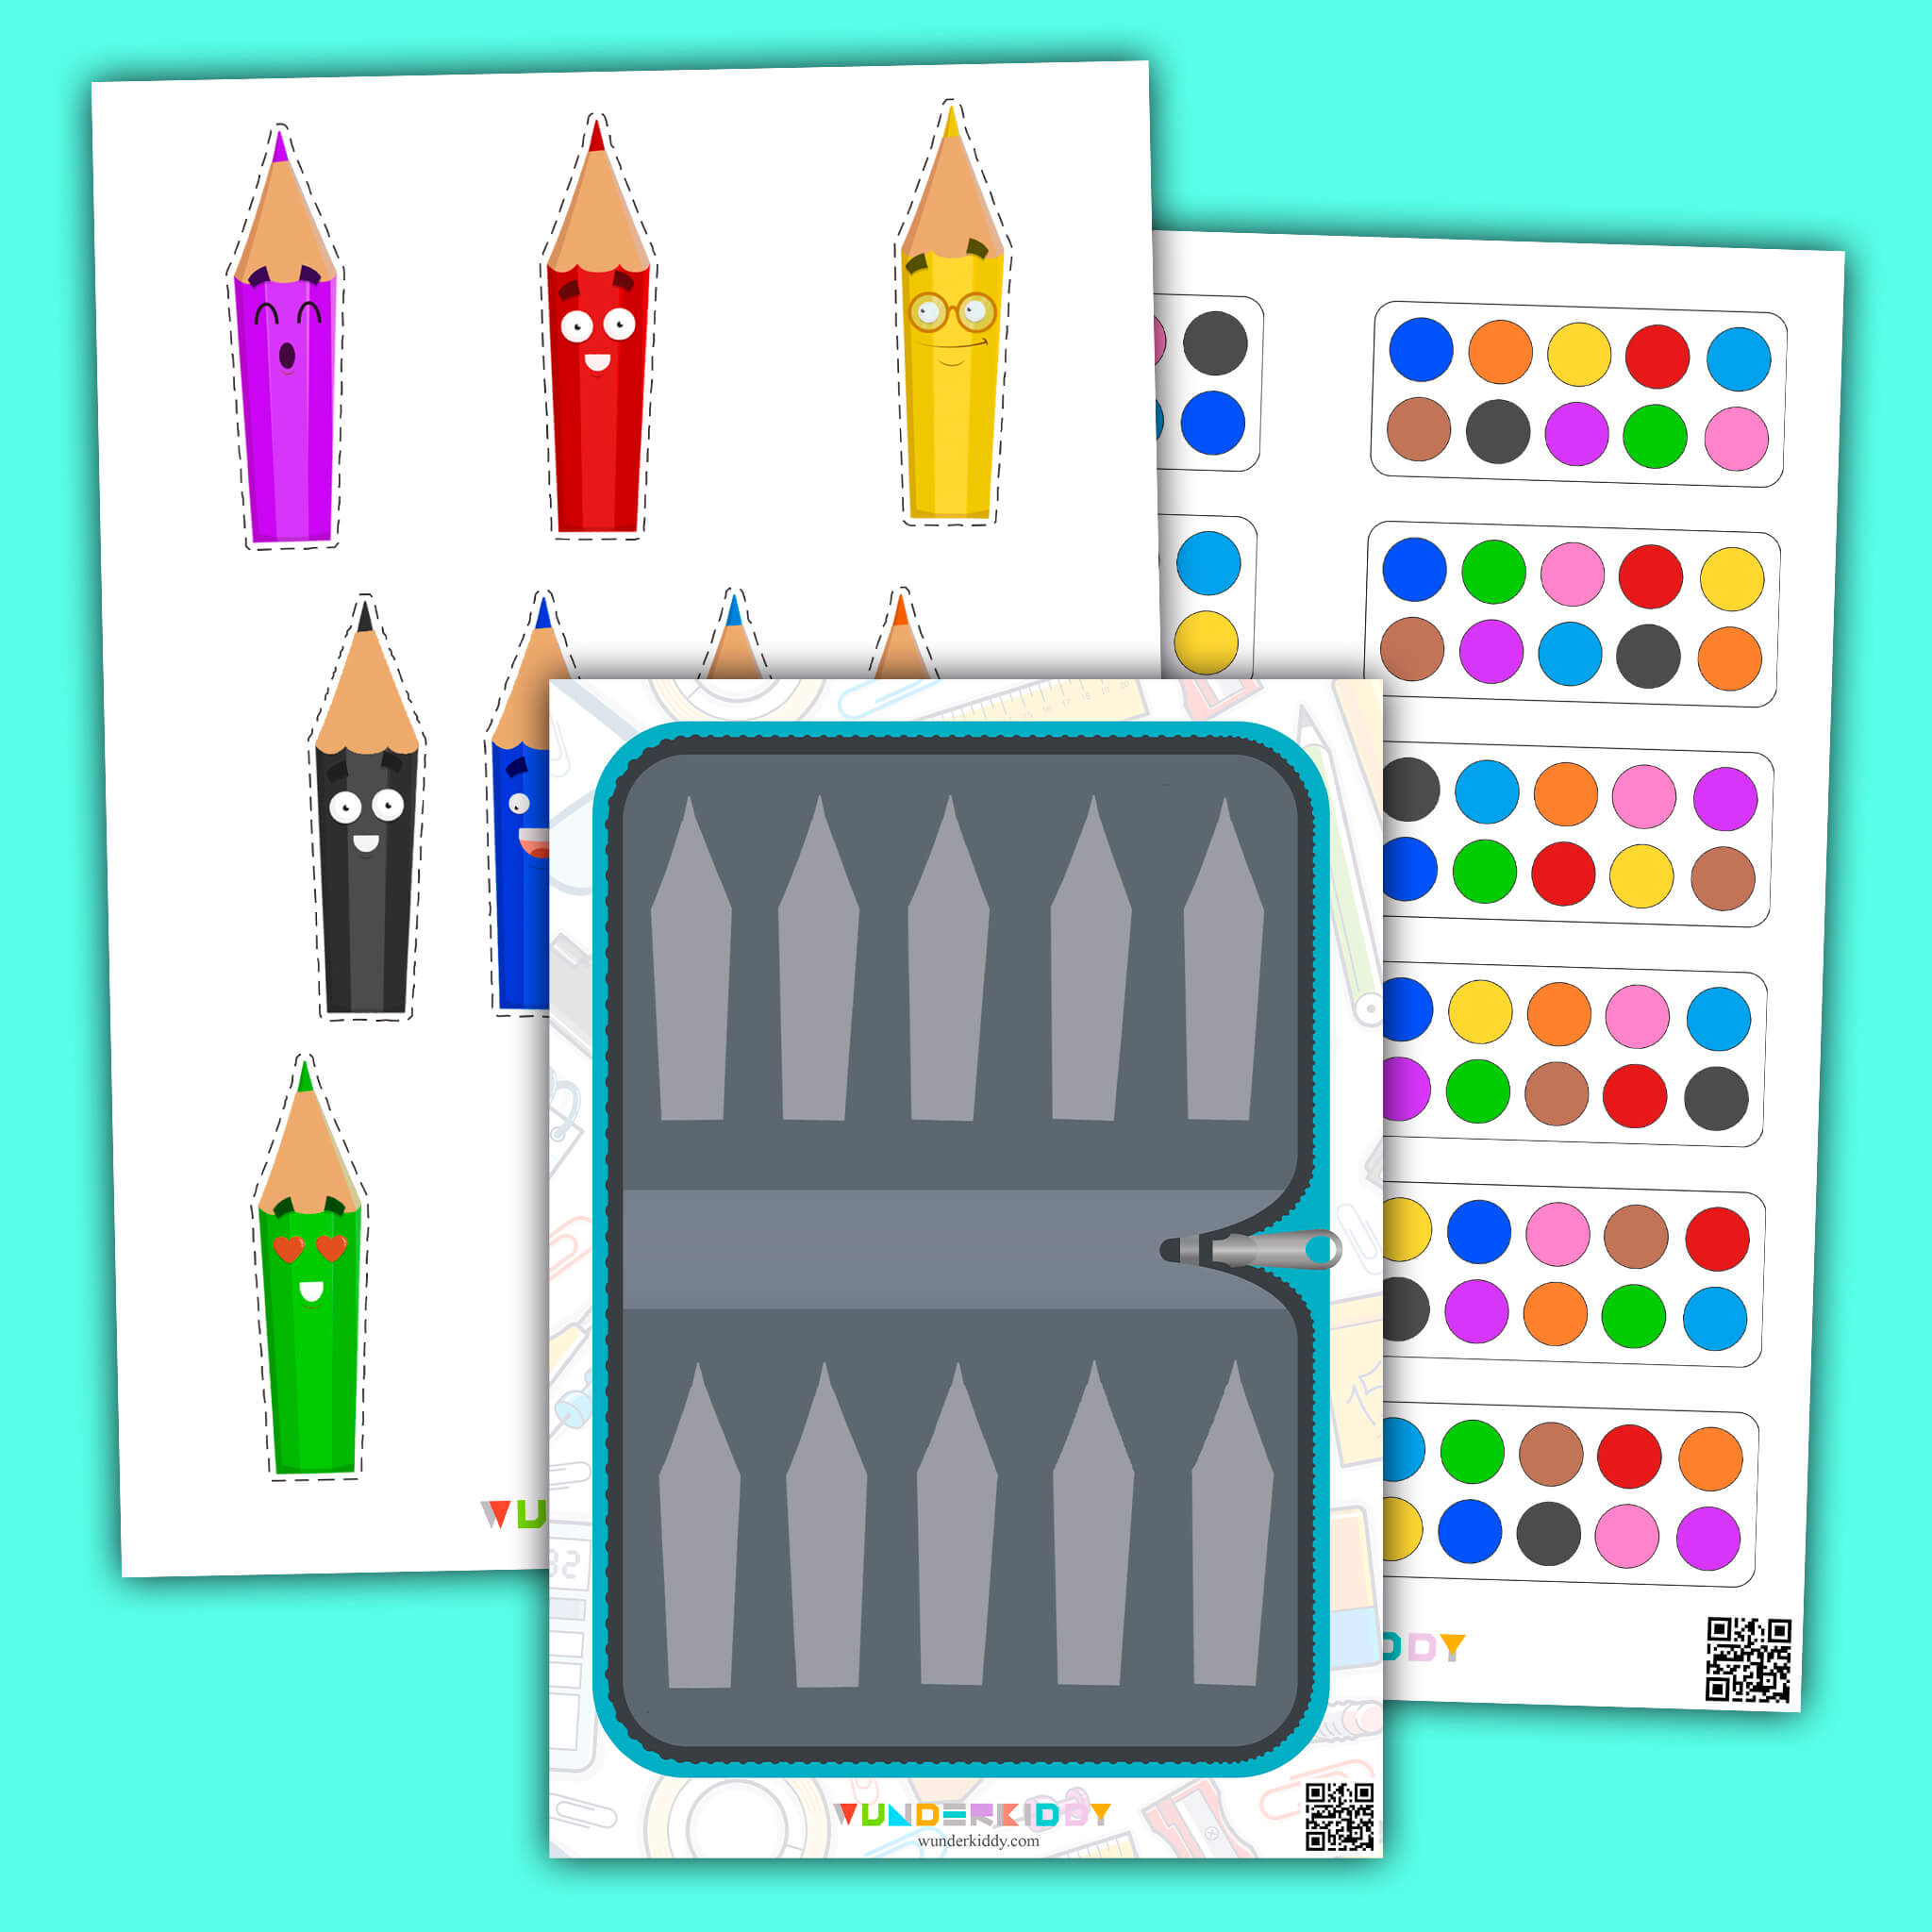 Учим цвета в игре «Пенал с карандашами»